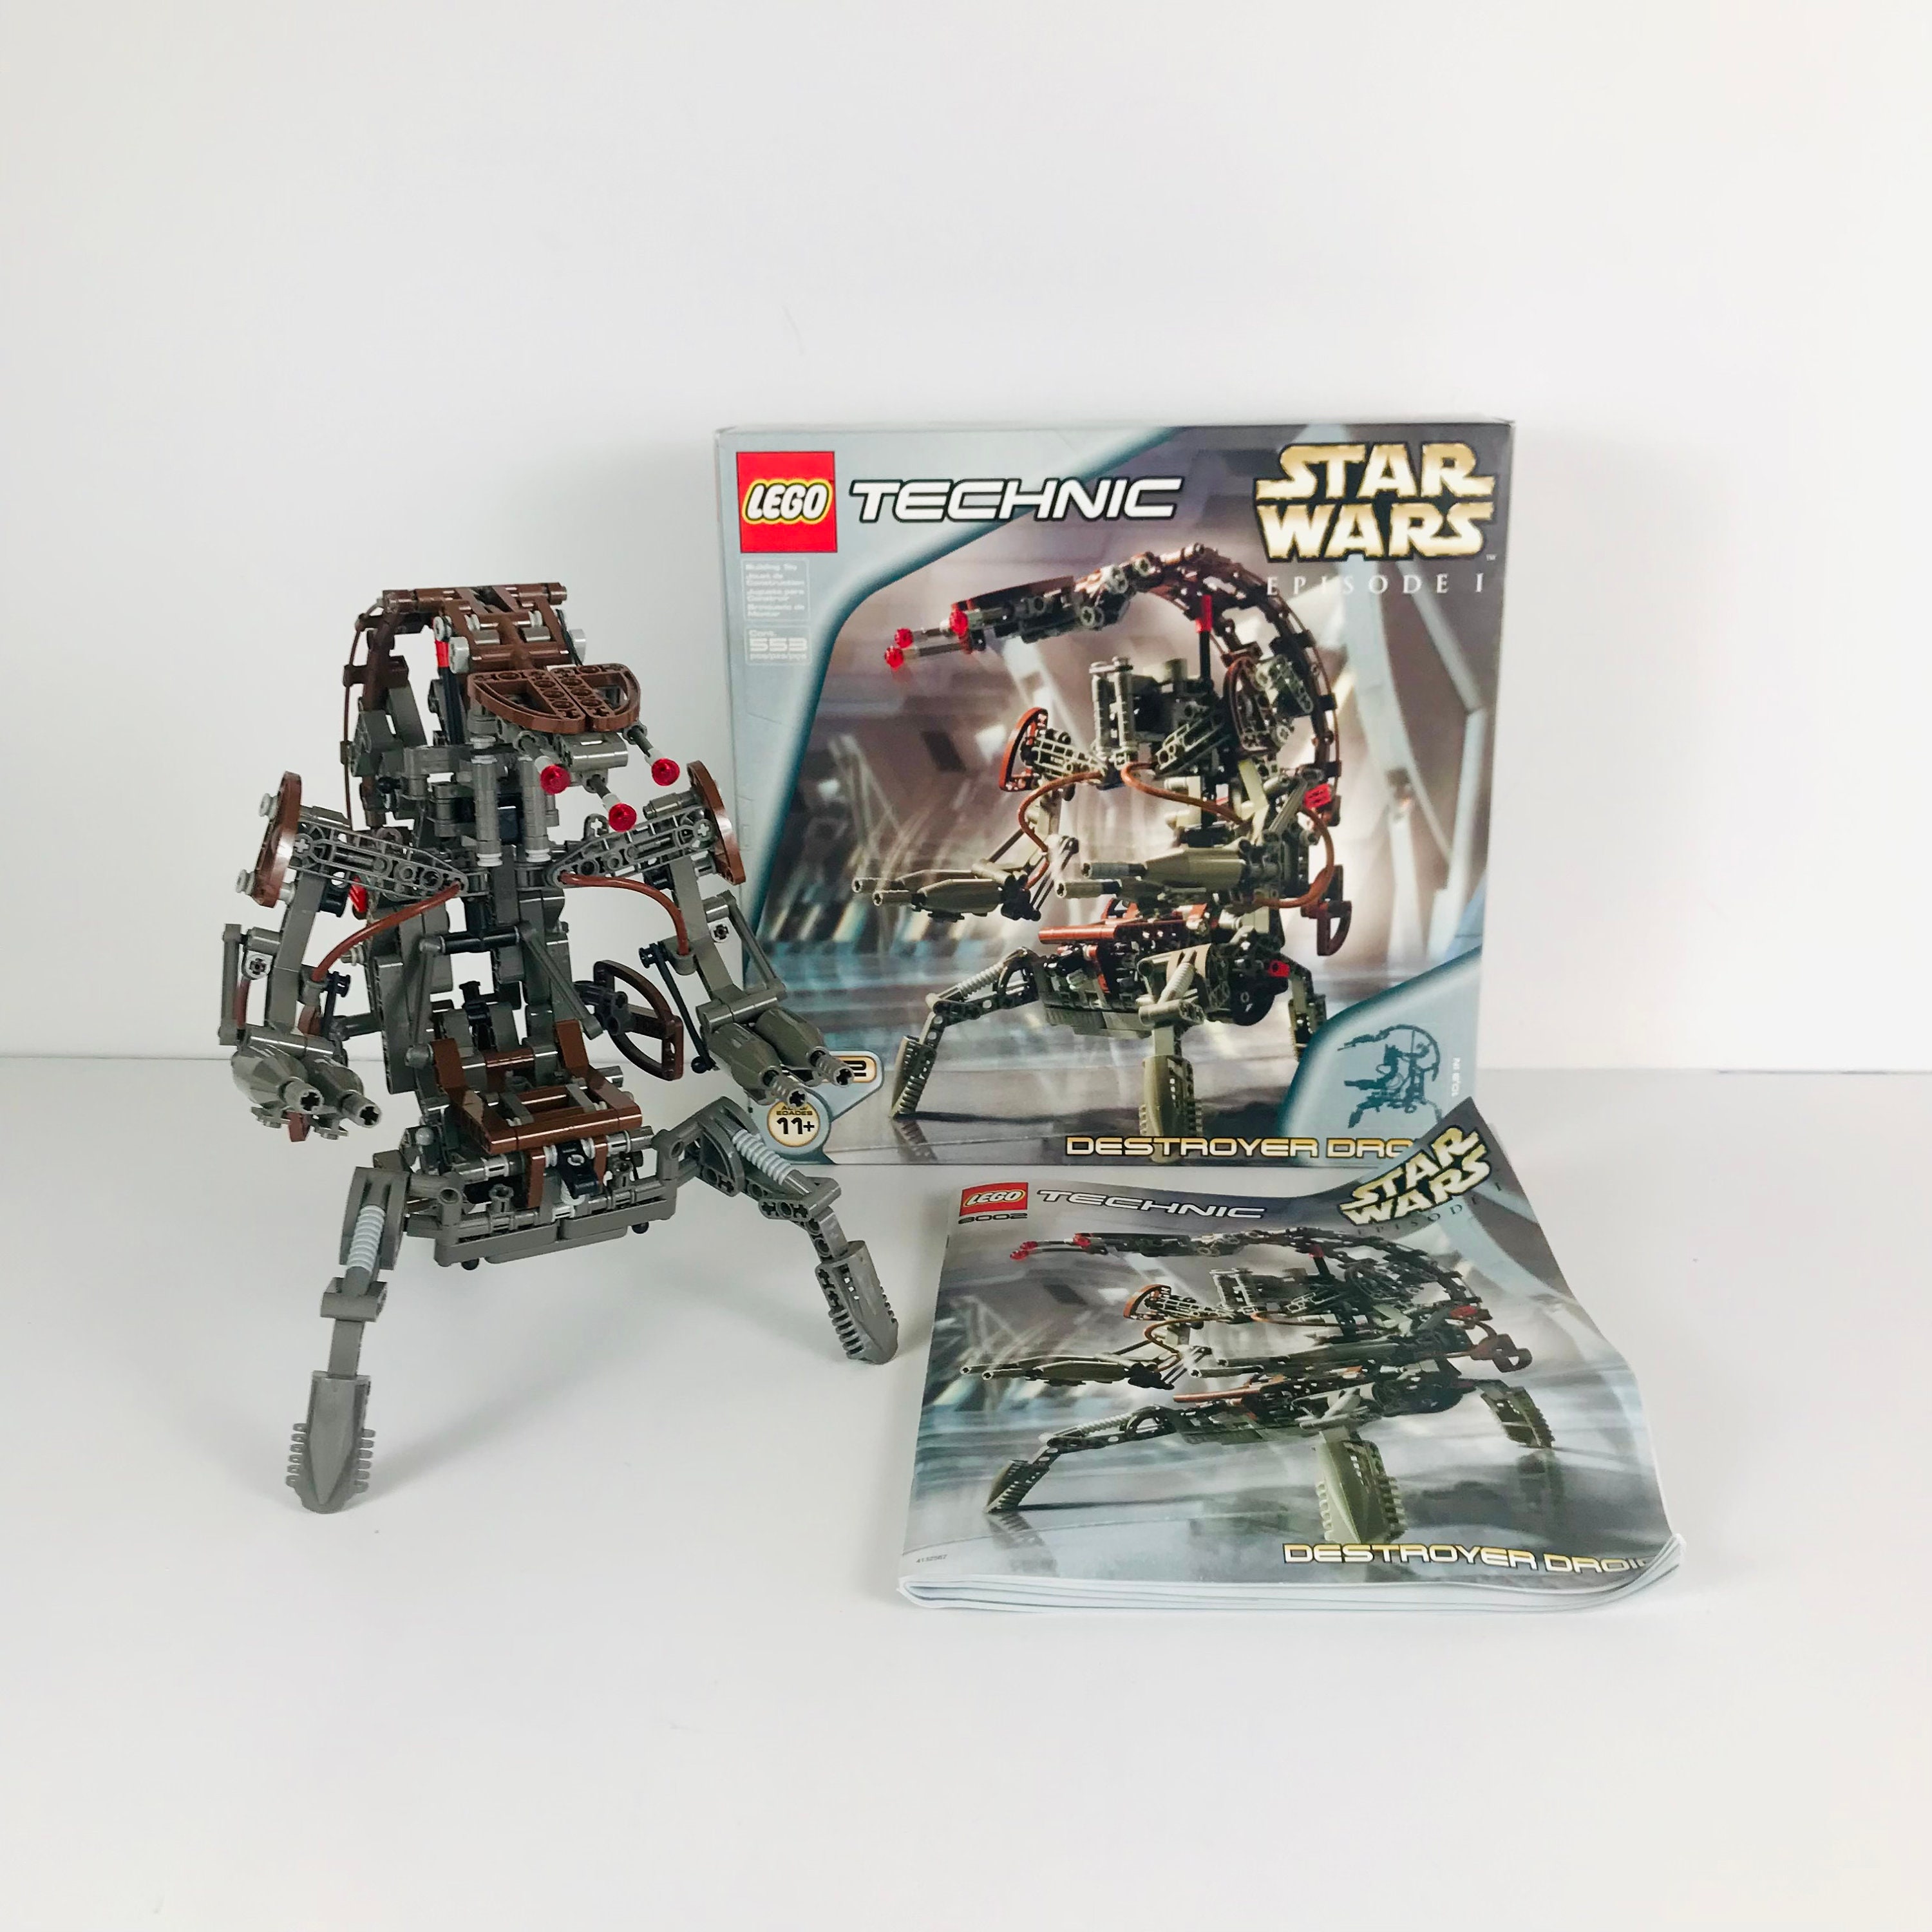 1999 Star Wars LEGO Tecnic Rolling Destroyer - Etsy 日本